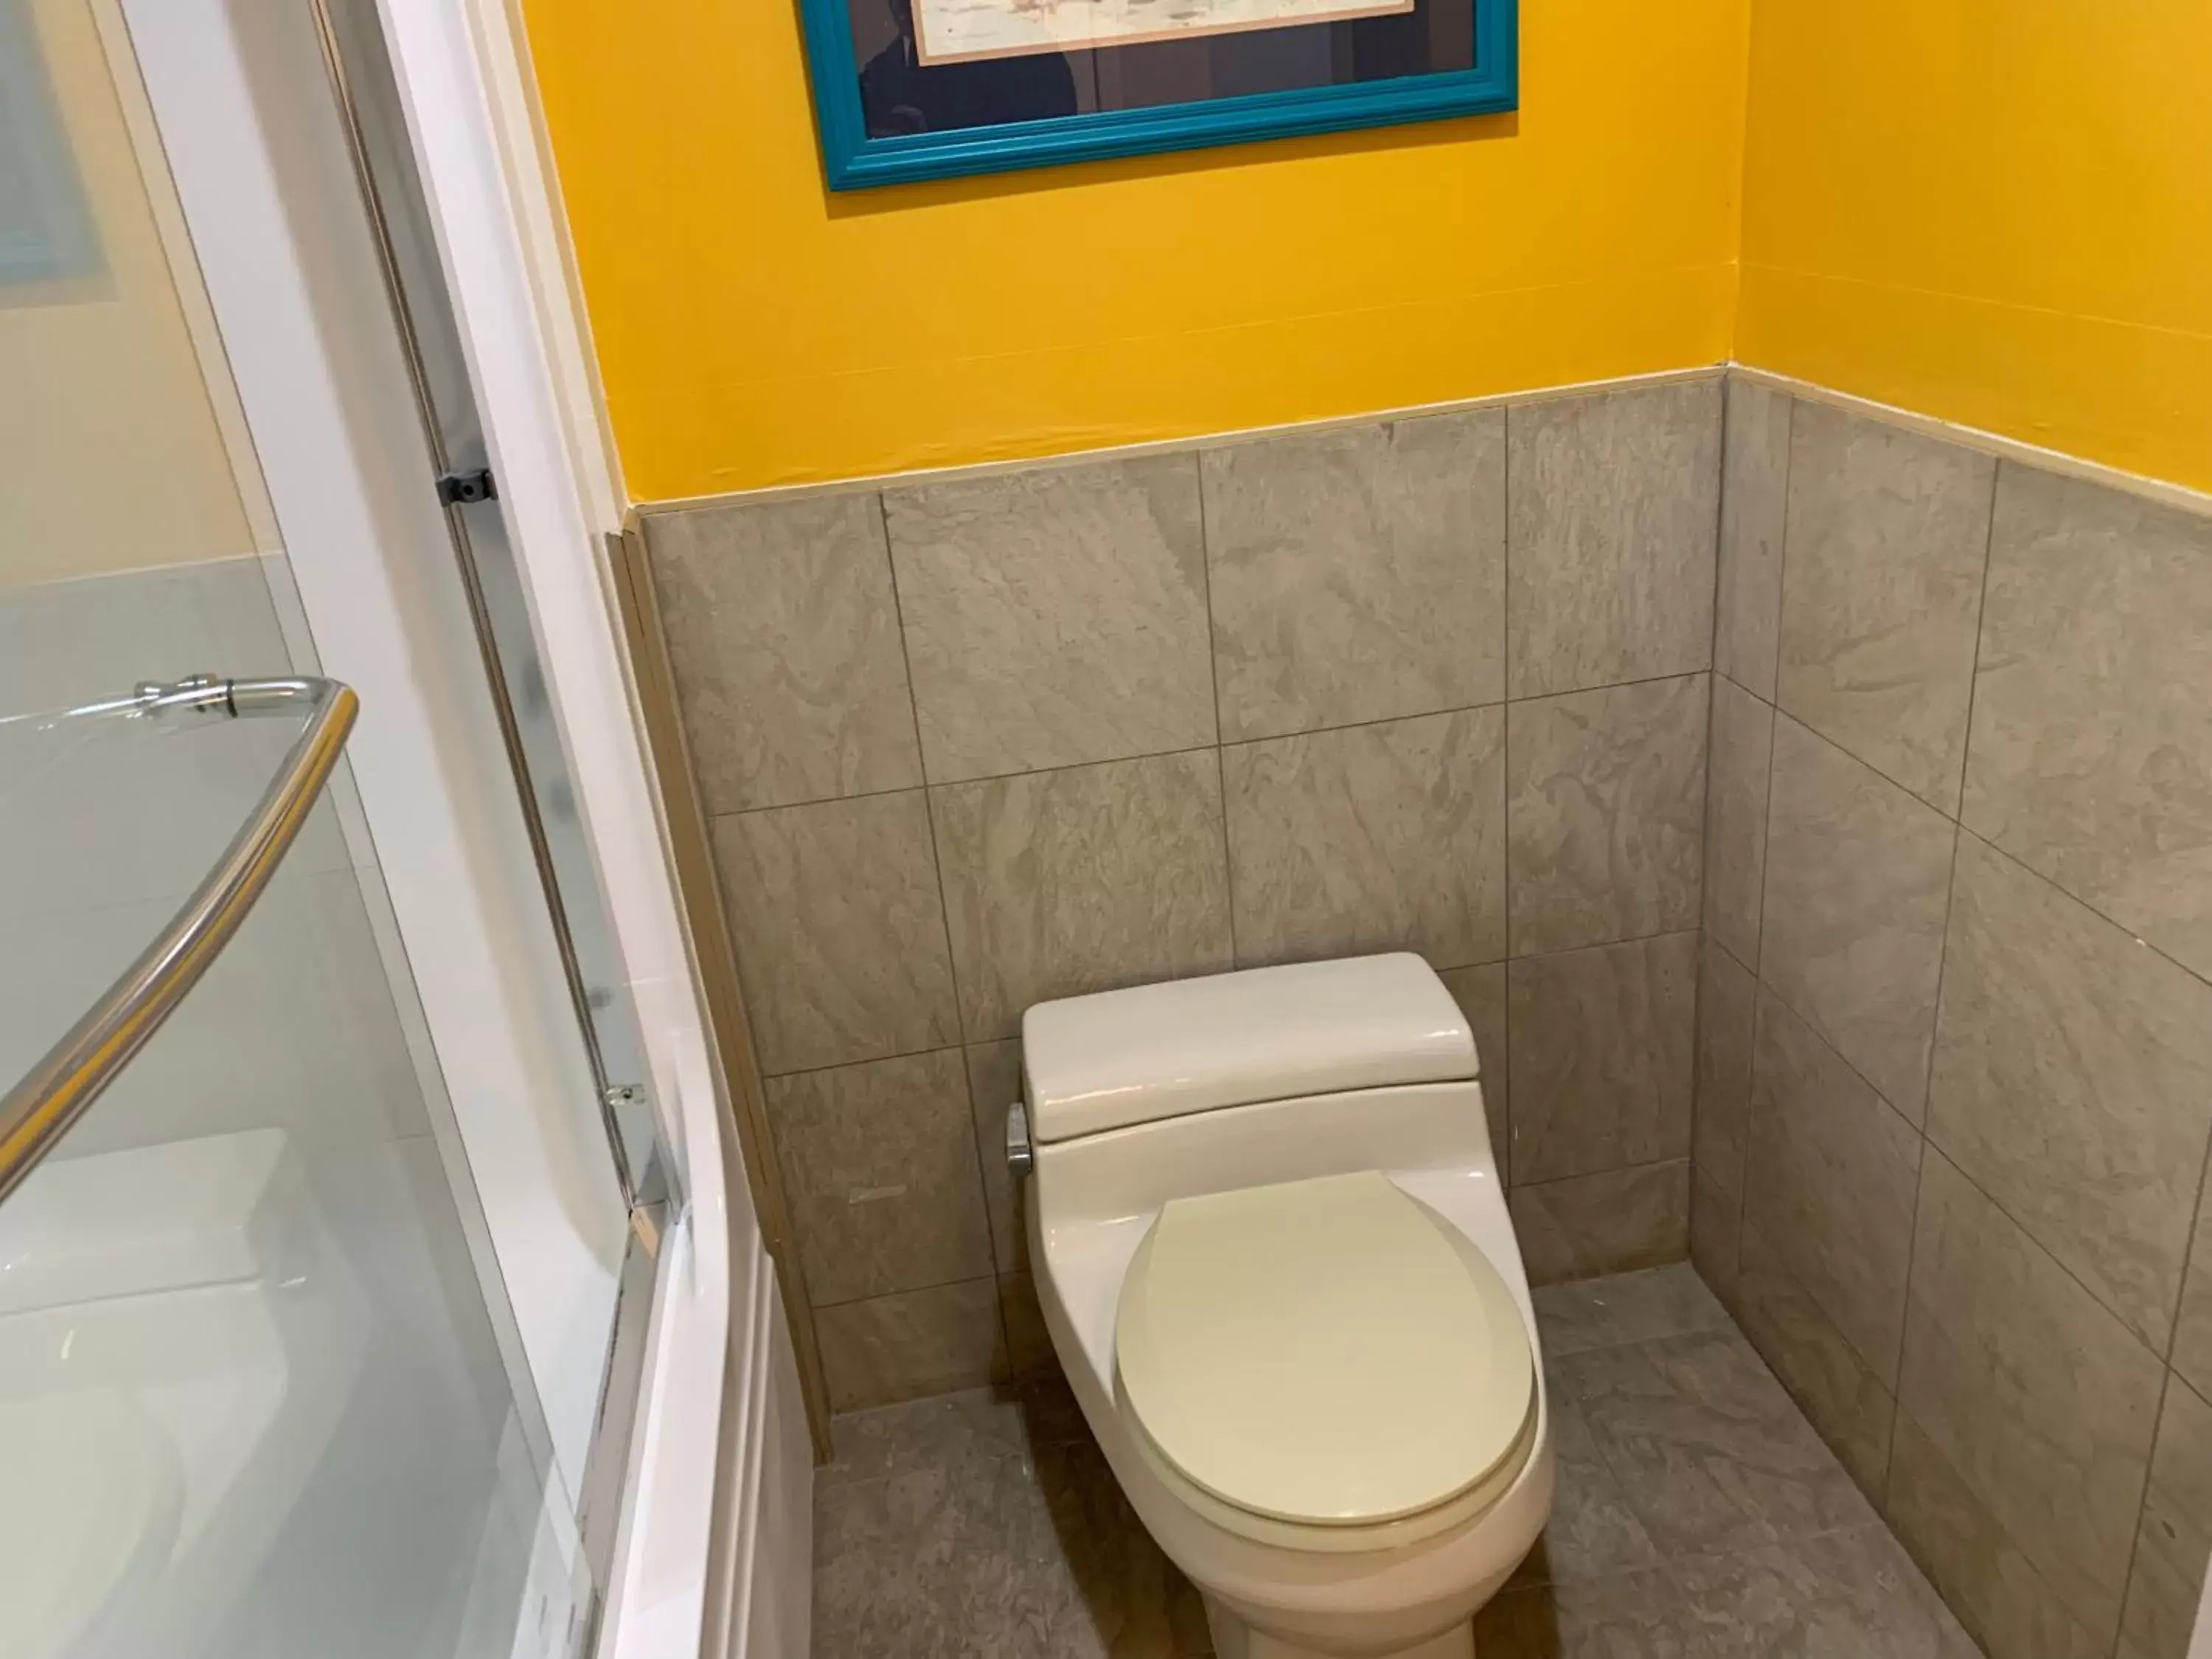 Bathroom in Split Rock Resort